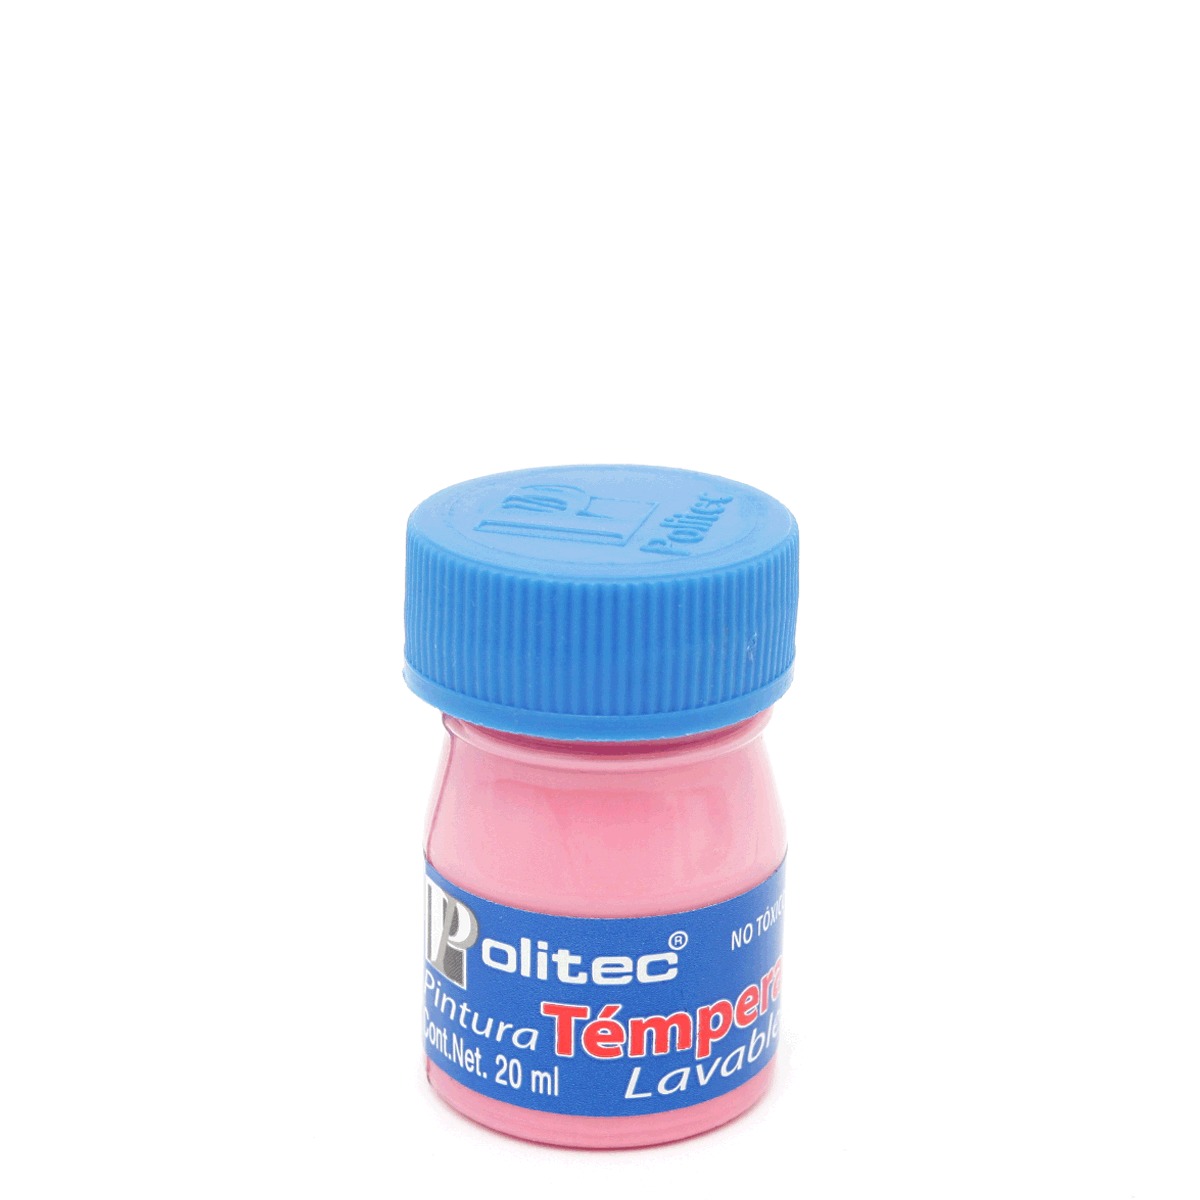 Pintura Témpera Lavable Politec 82 / Rosa pastel / 1 pieza / 20 ml